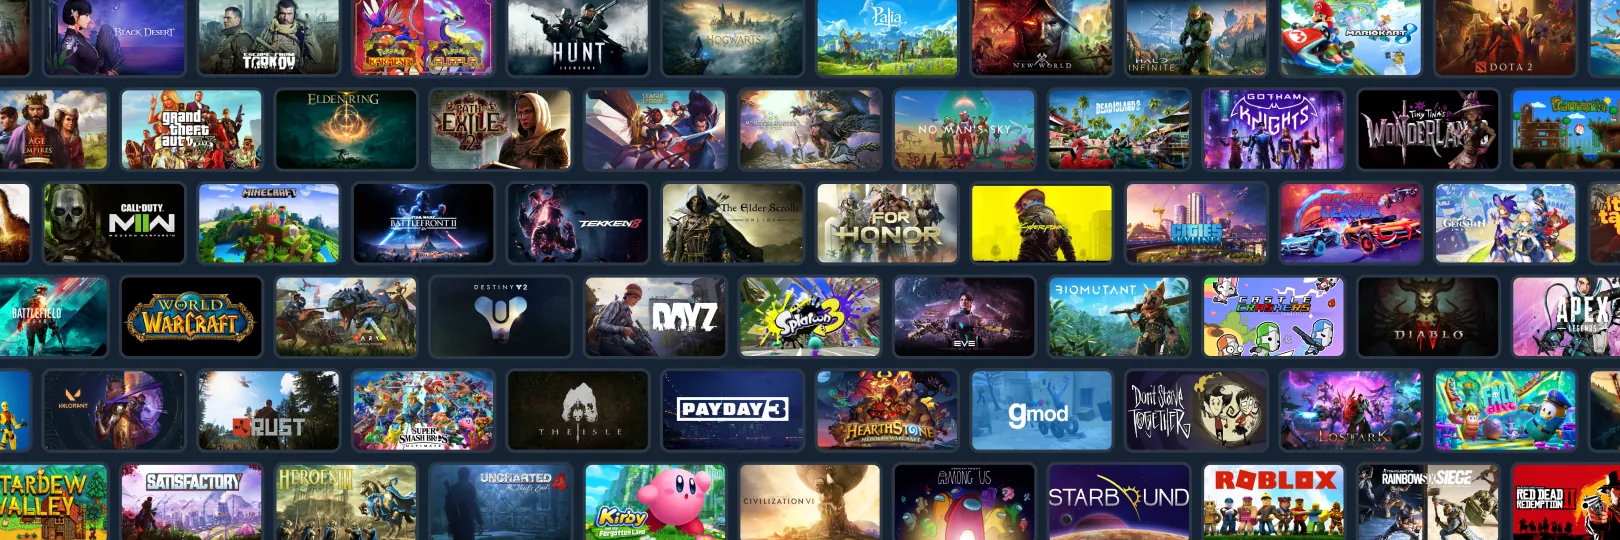 games banner image